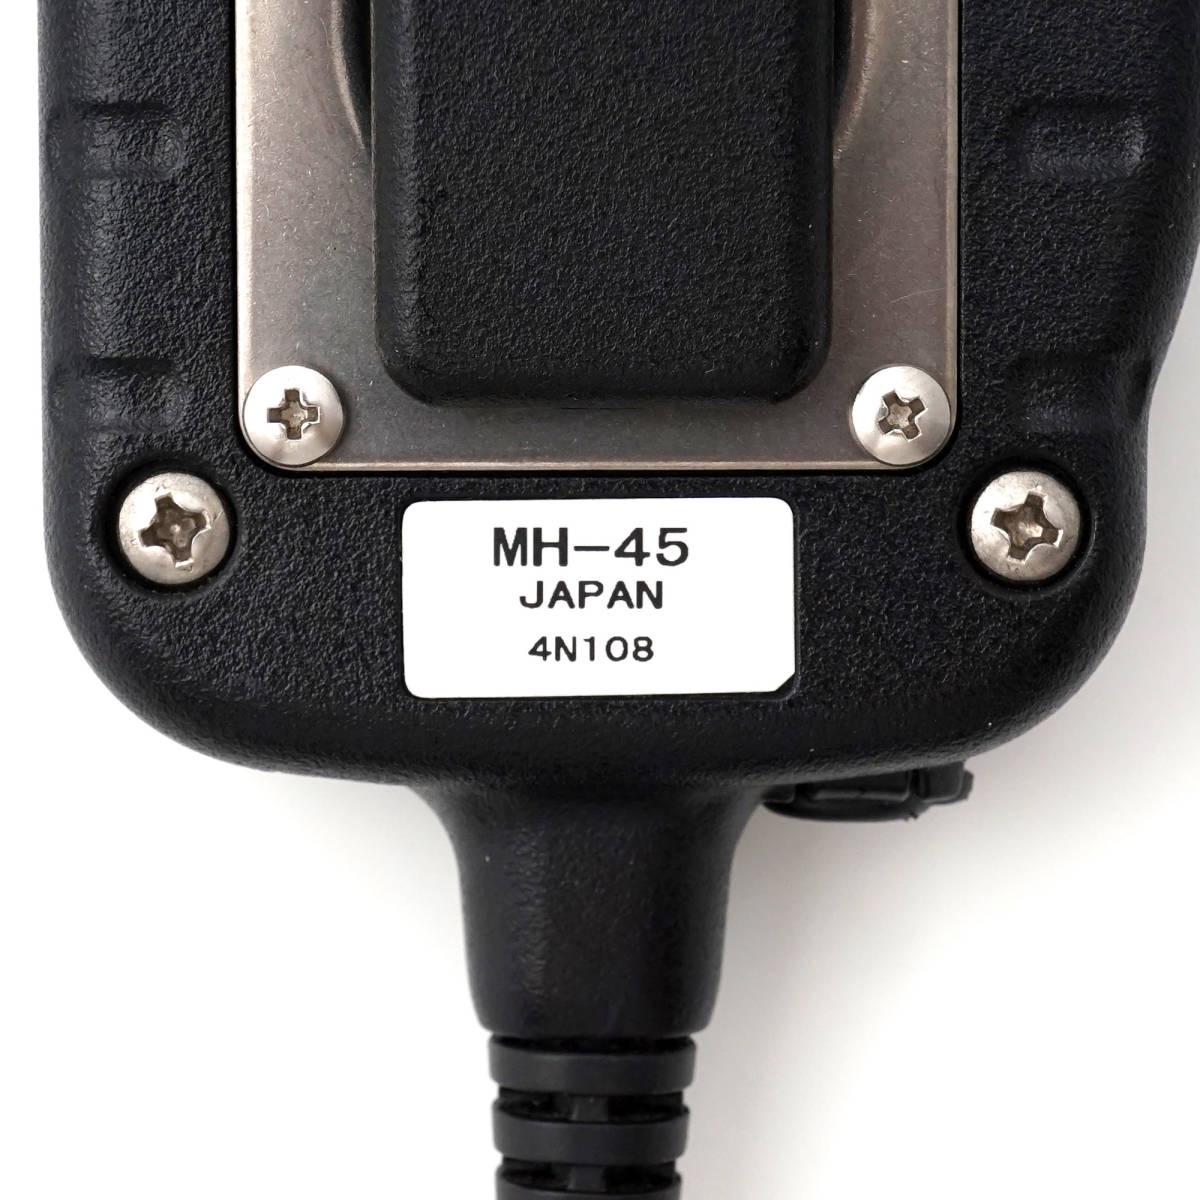 VERTEX STANDARD MH-45 remote speaker Mike YAESU Yaesu wireless bar Tec s standard MOTOROLA Motorola business use waterproof police 